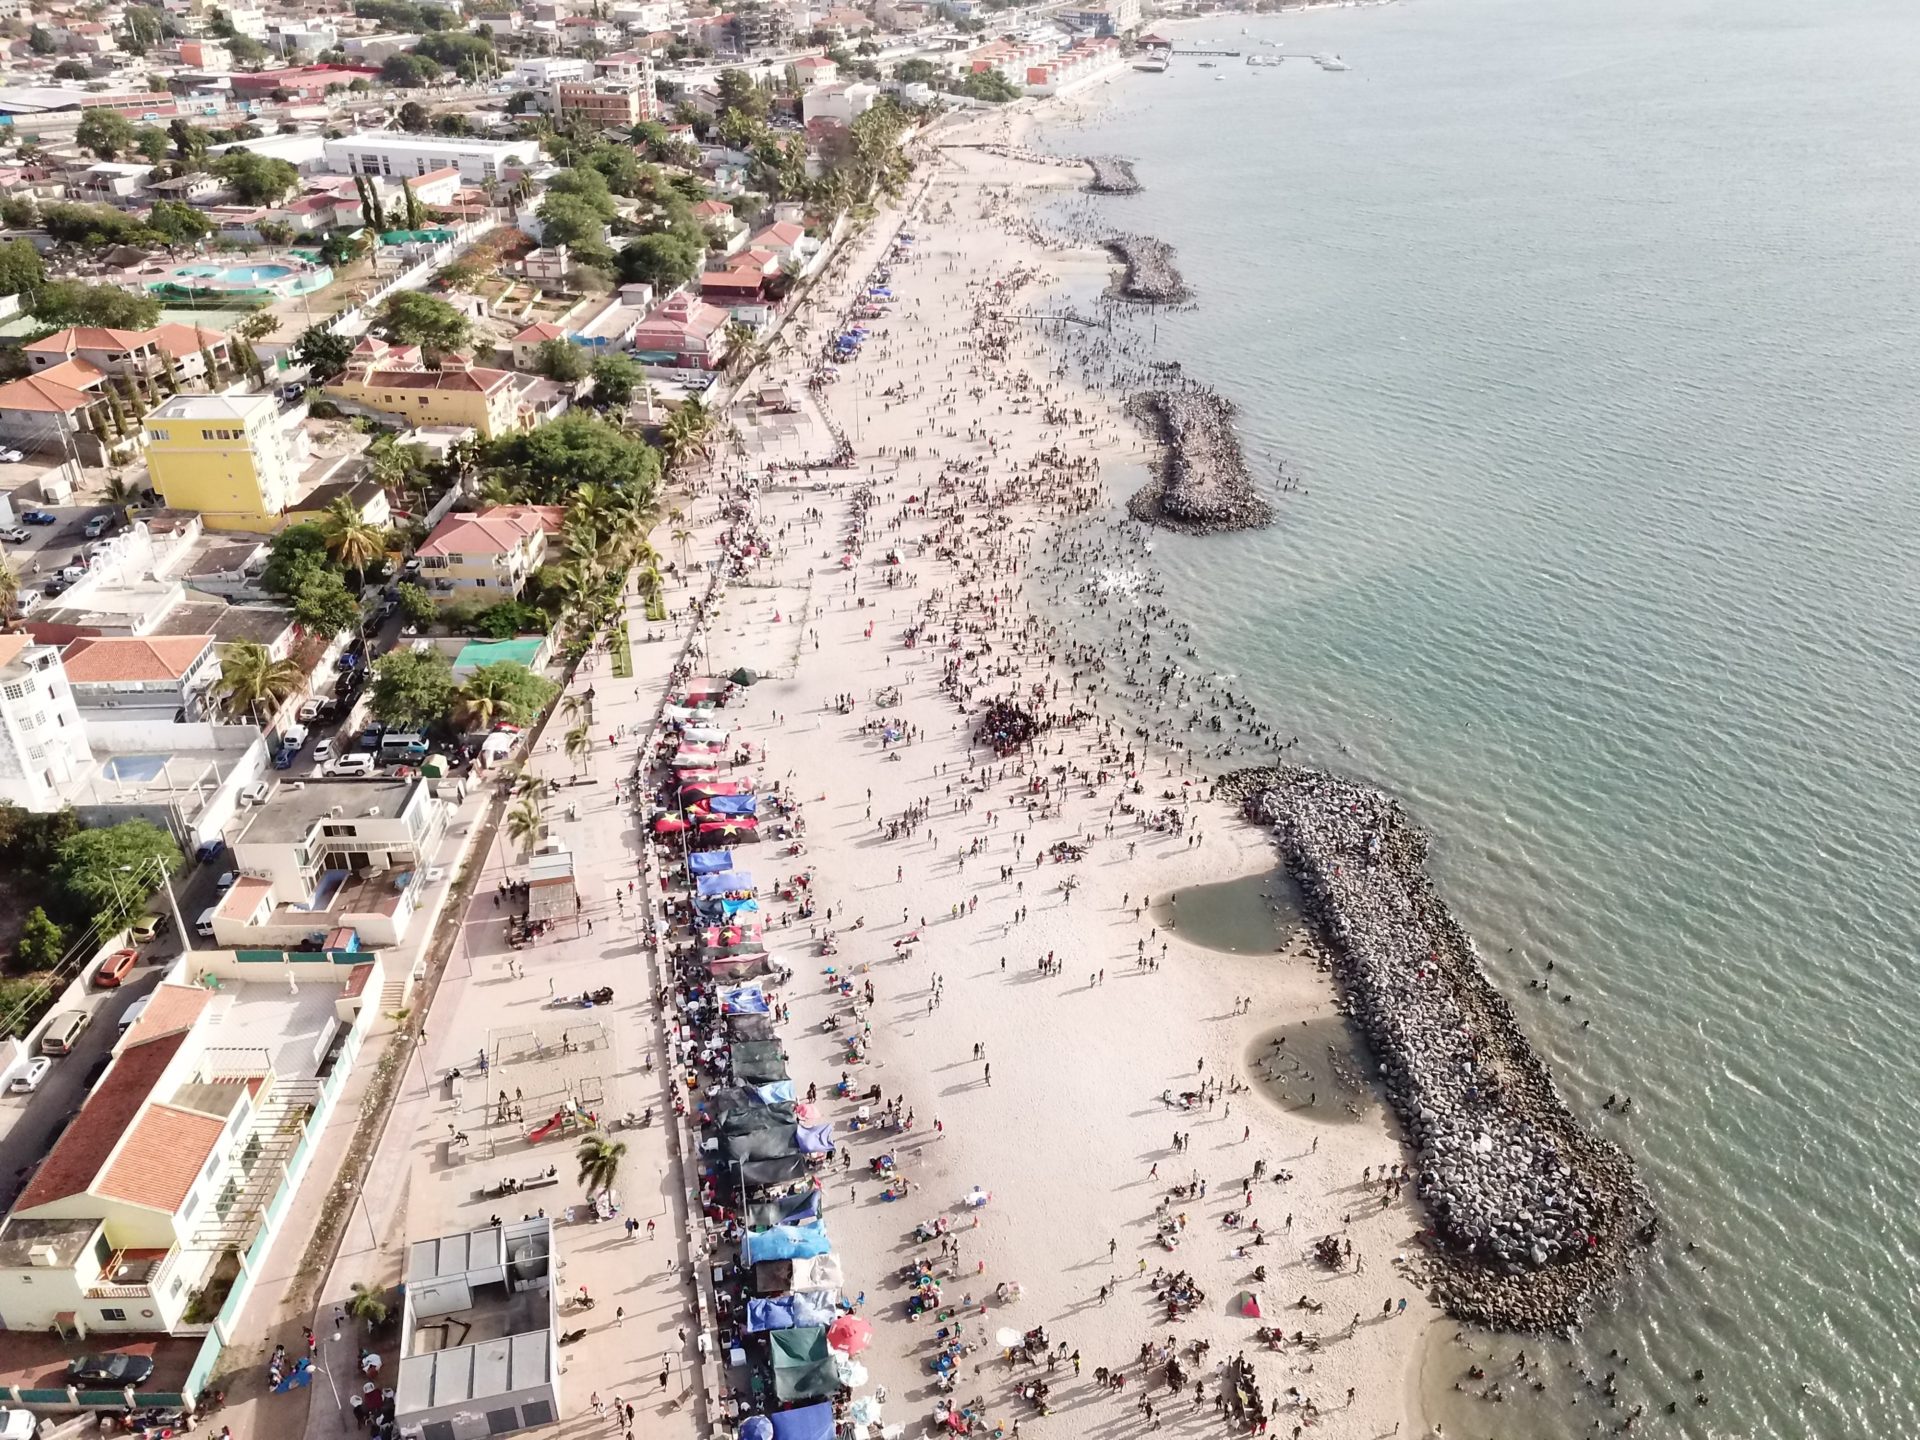 Aerial view of densely populated shoreline, Belas, Angola. Photo by Hermenegildo Sebastião on Unsplash